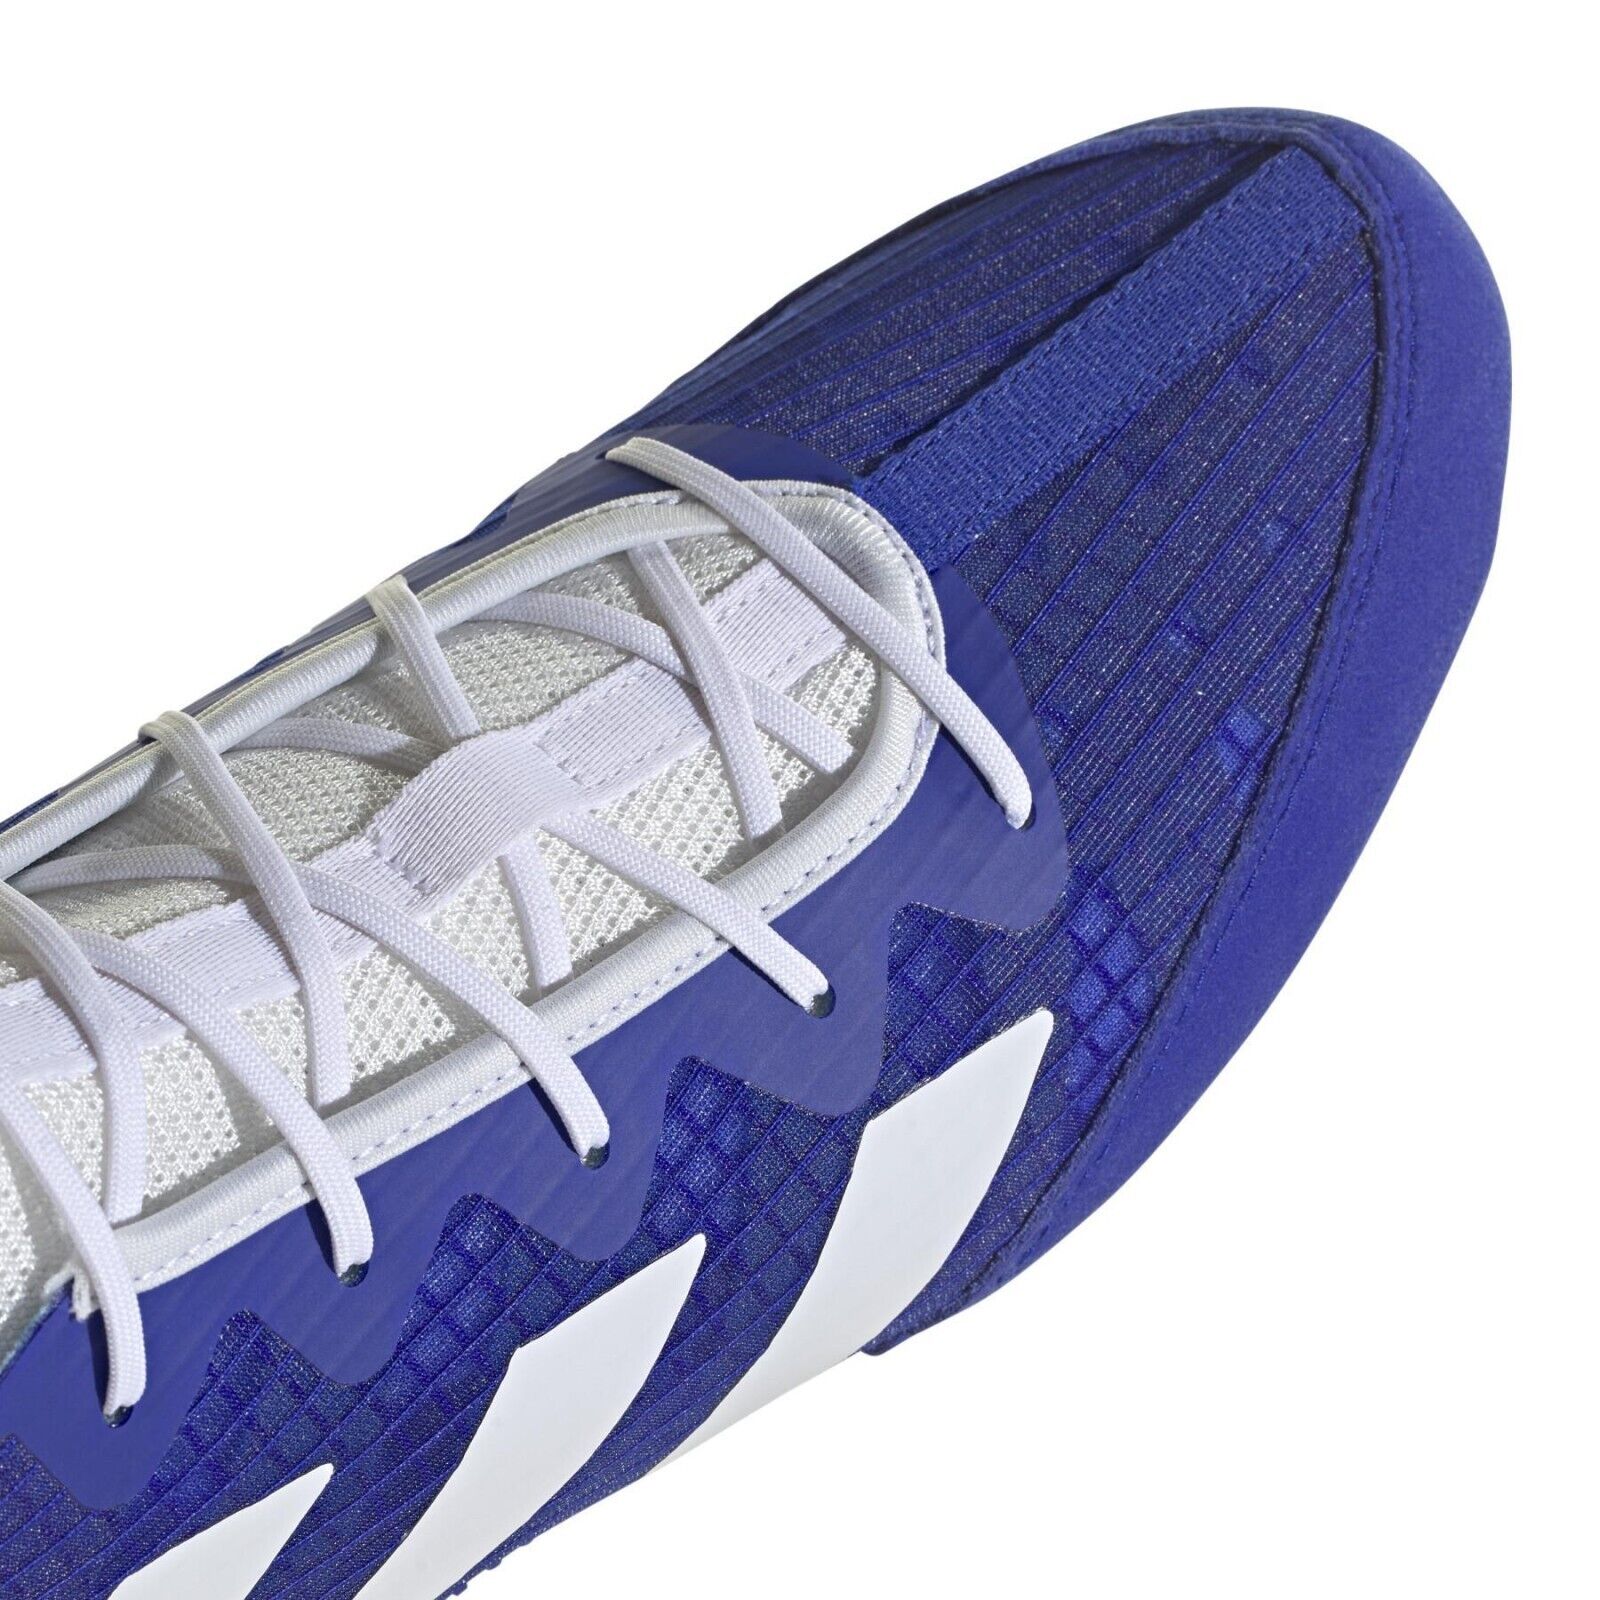 adidas Box Hog 4 Boxing Boots Blue & White - Budo Online